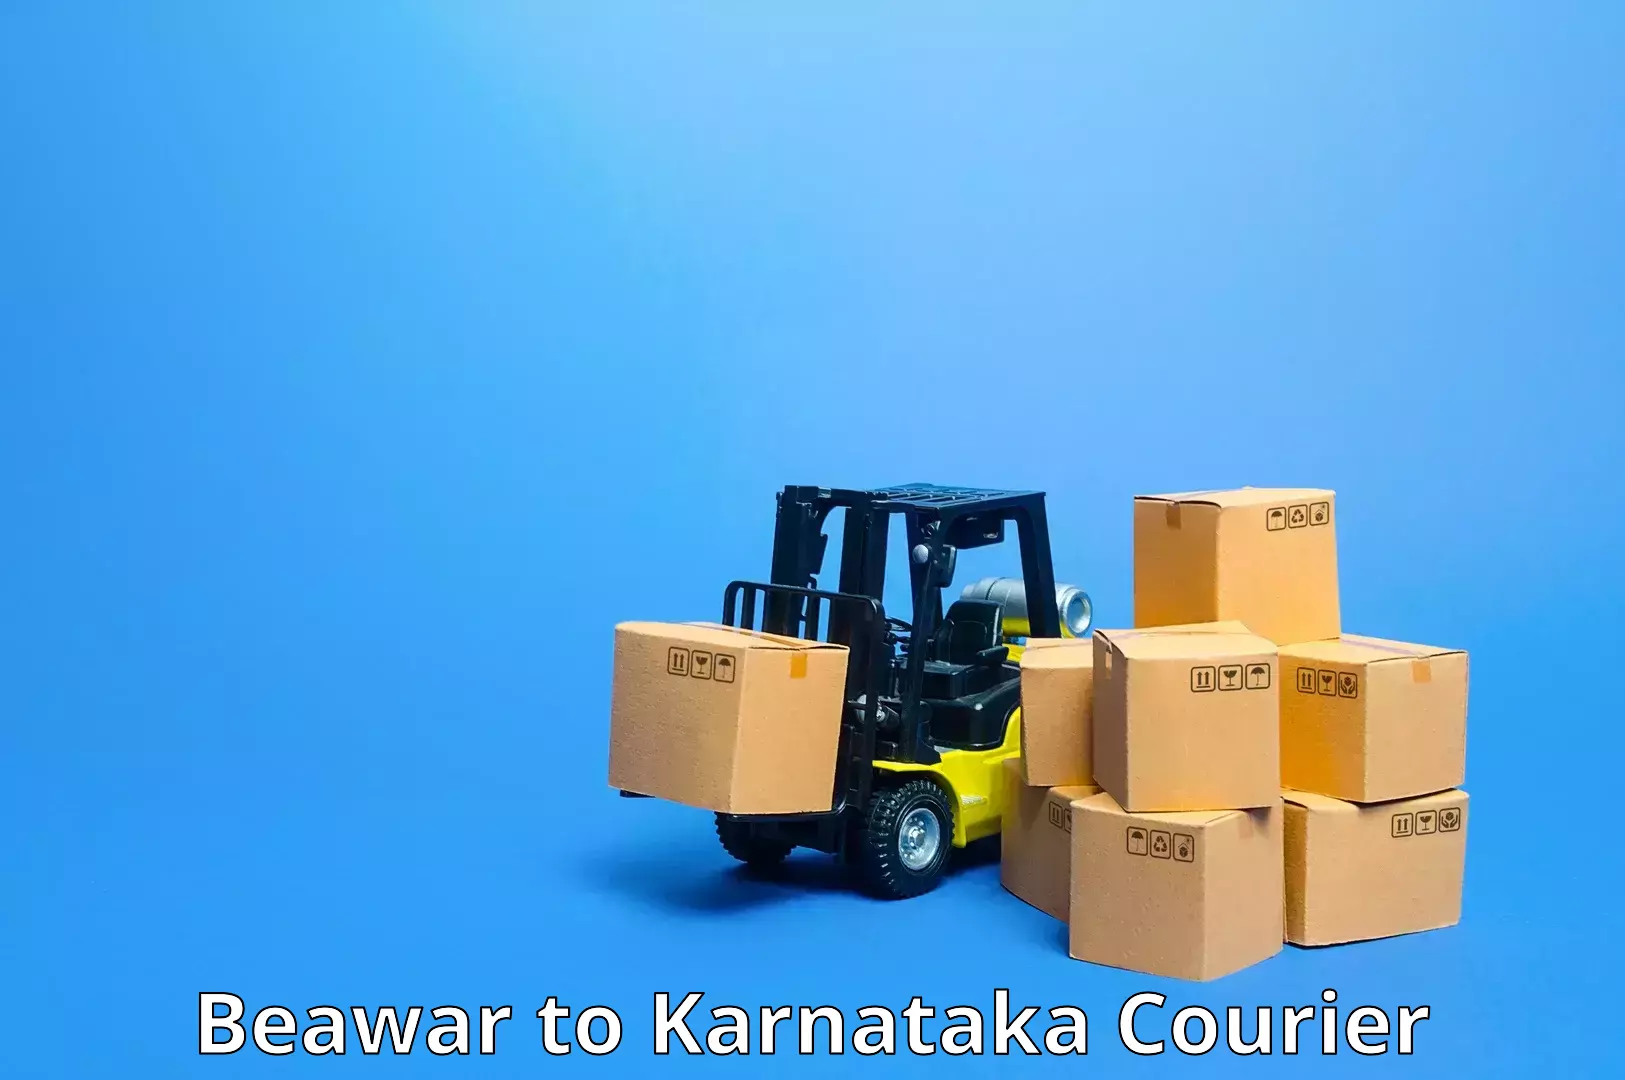 Express courier capabilities Beawar to Bengaluru